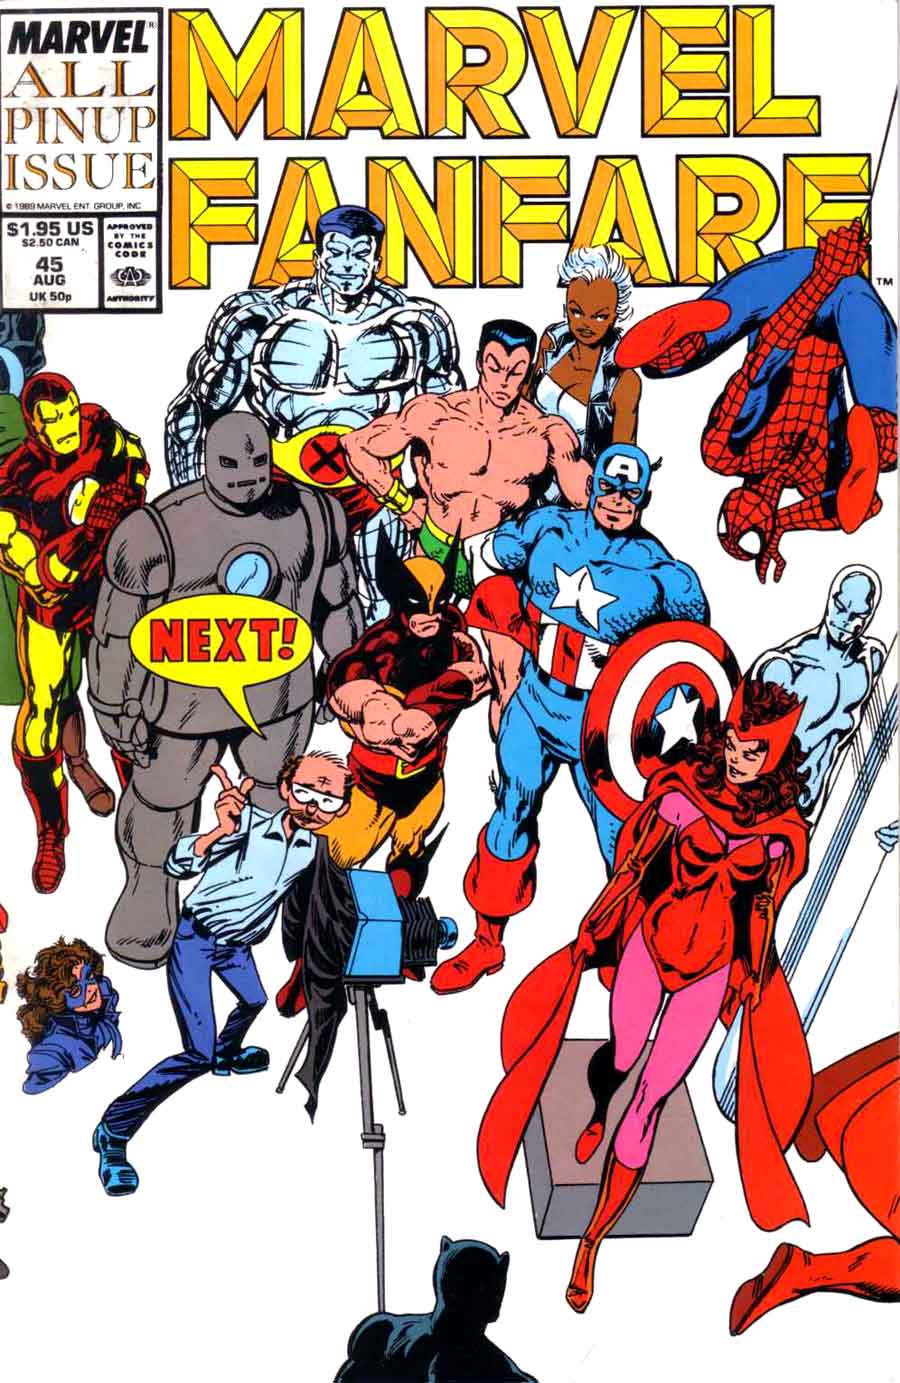 John Byrne 1980s iron man wolverine silver surfer captain america comic book cover - Marvel Fanfare #45